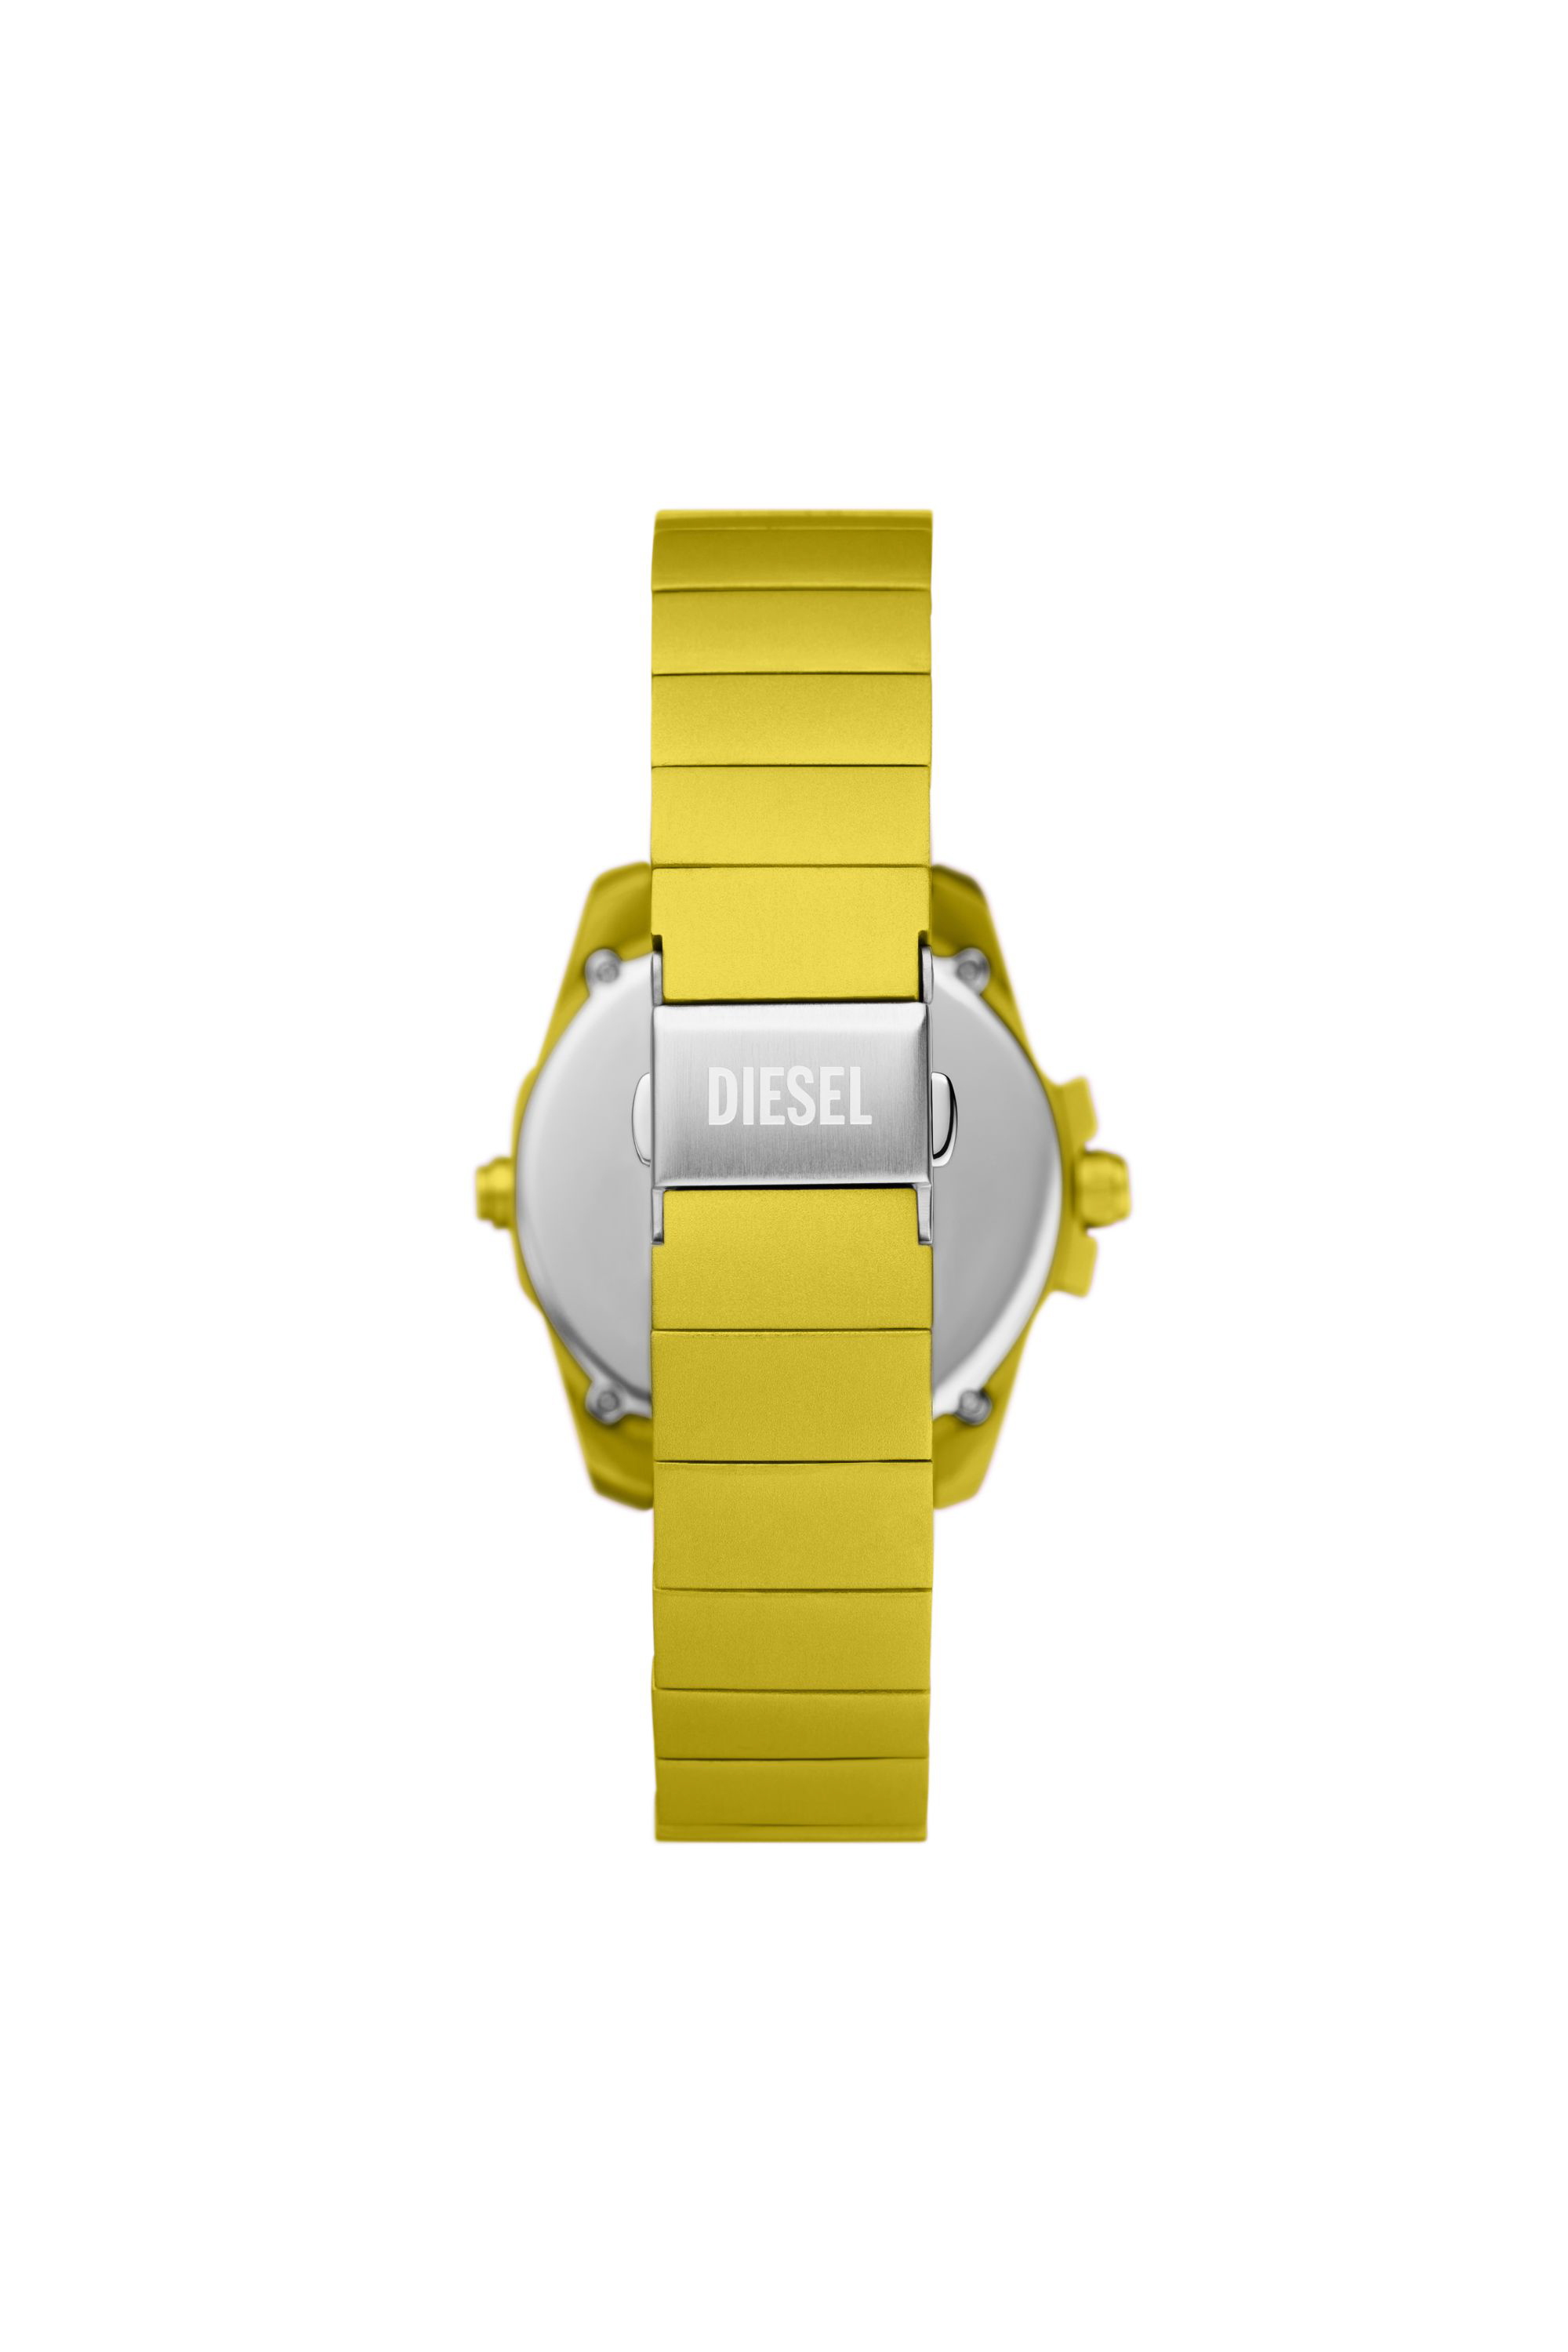 Diesel - DZ2207 WATCH, Male Baby chief digital yellow aluminum watch in Yellow - Image 2